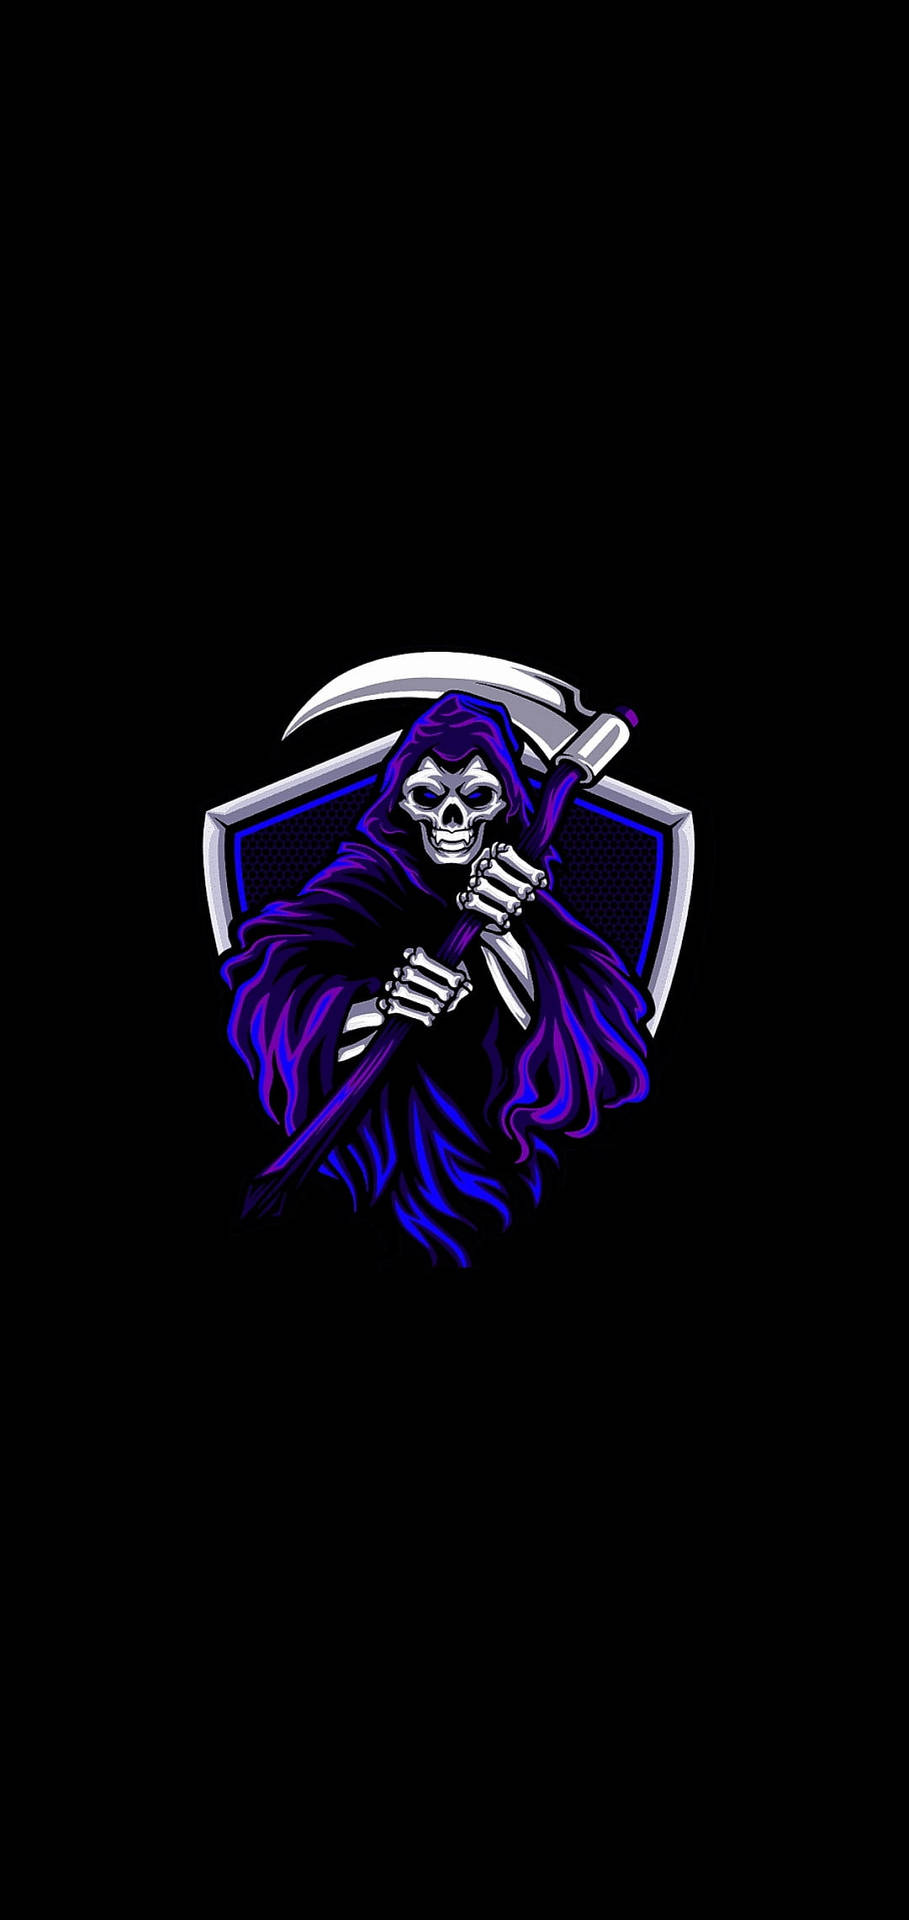 Grim Reaper Gaming Logo Hd Background